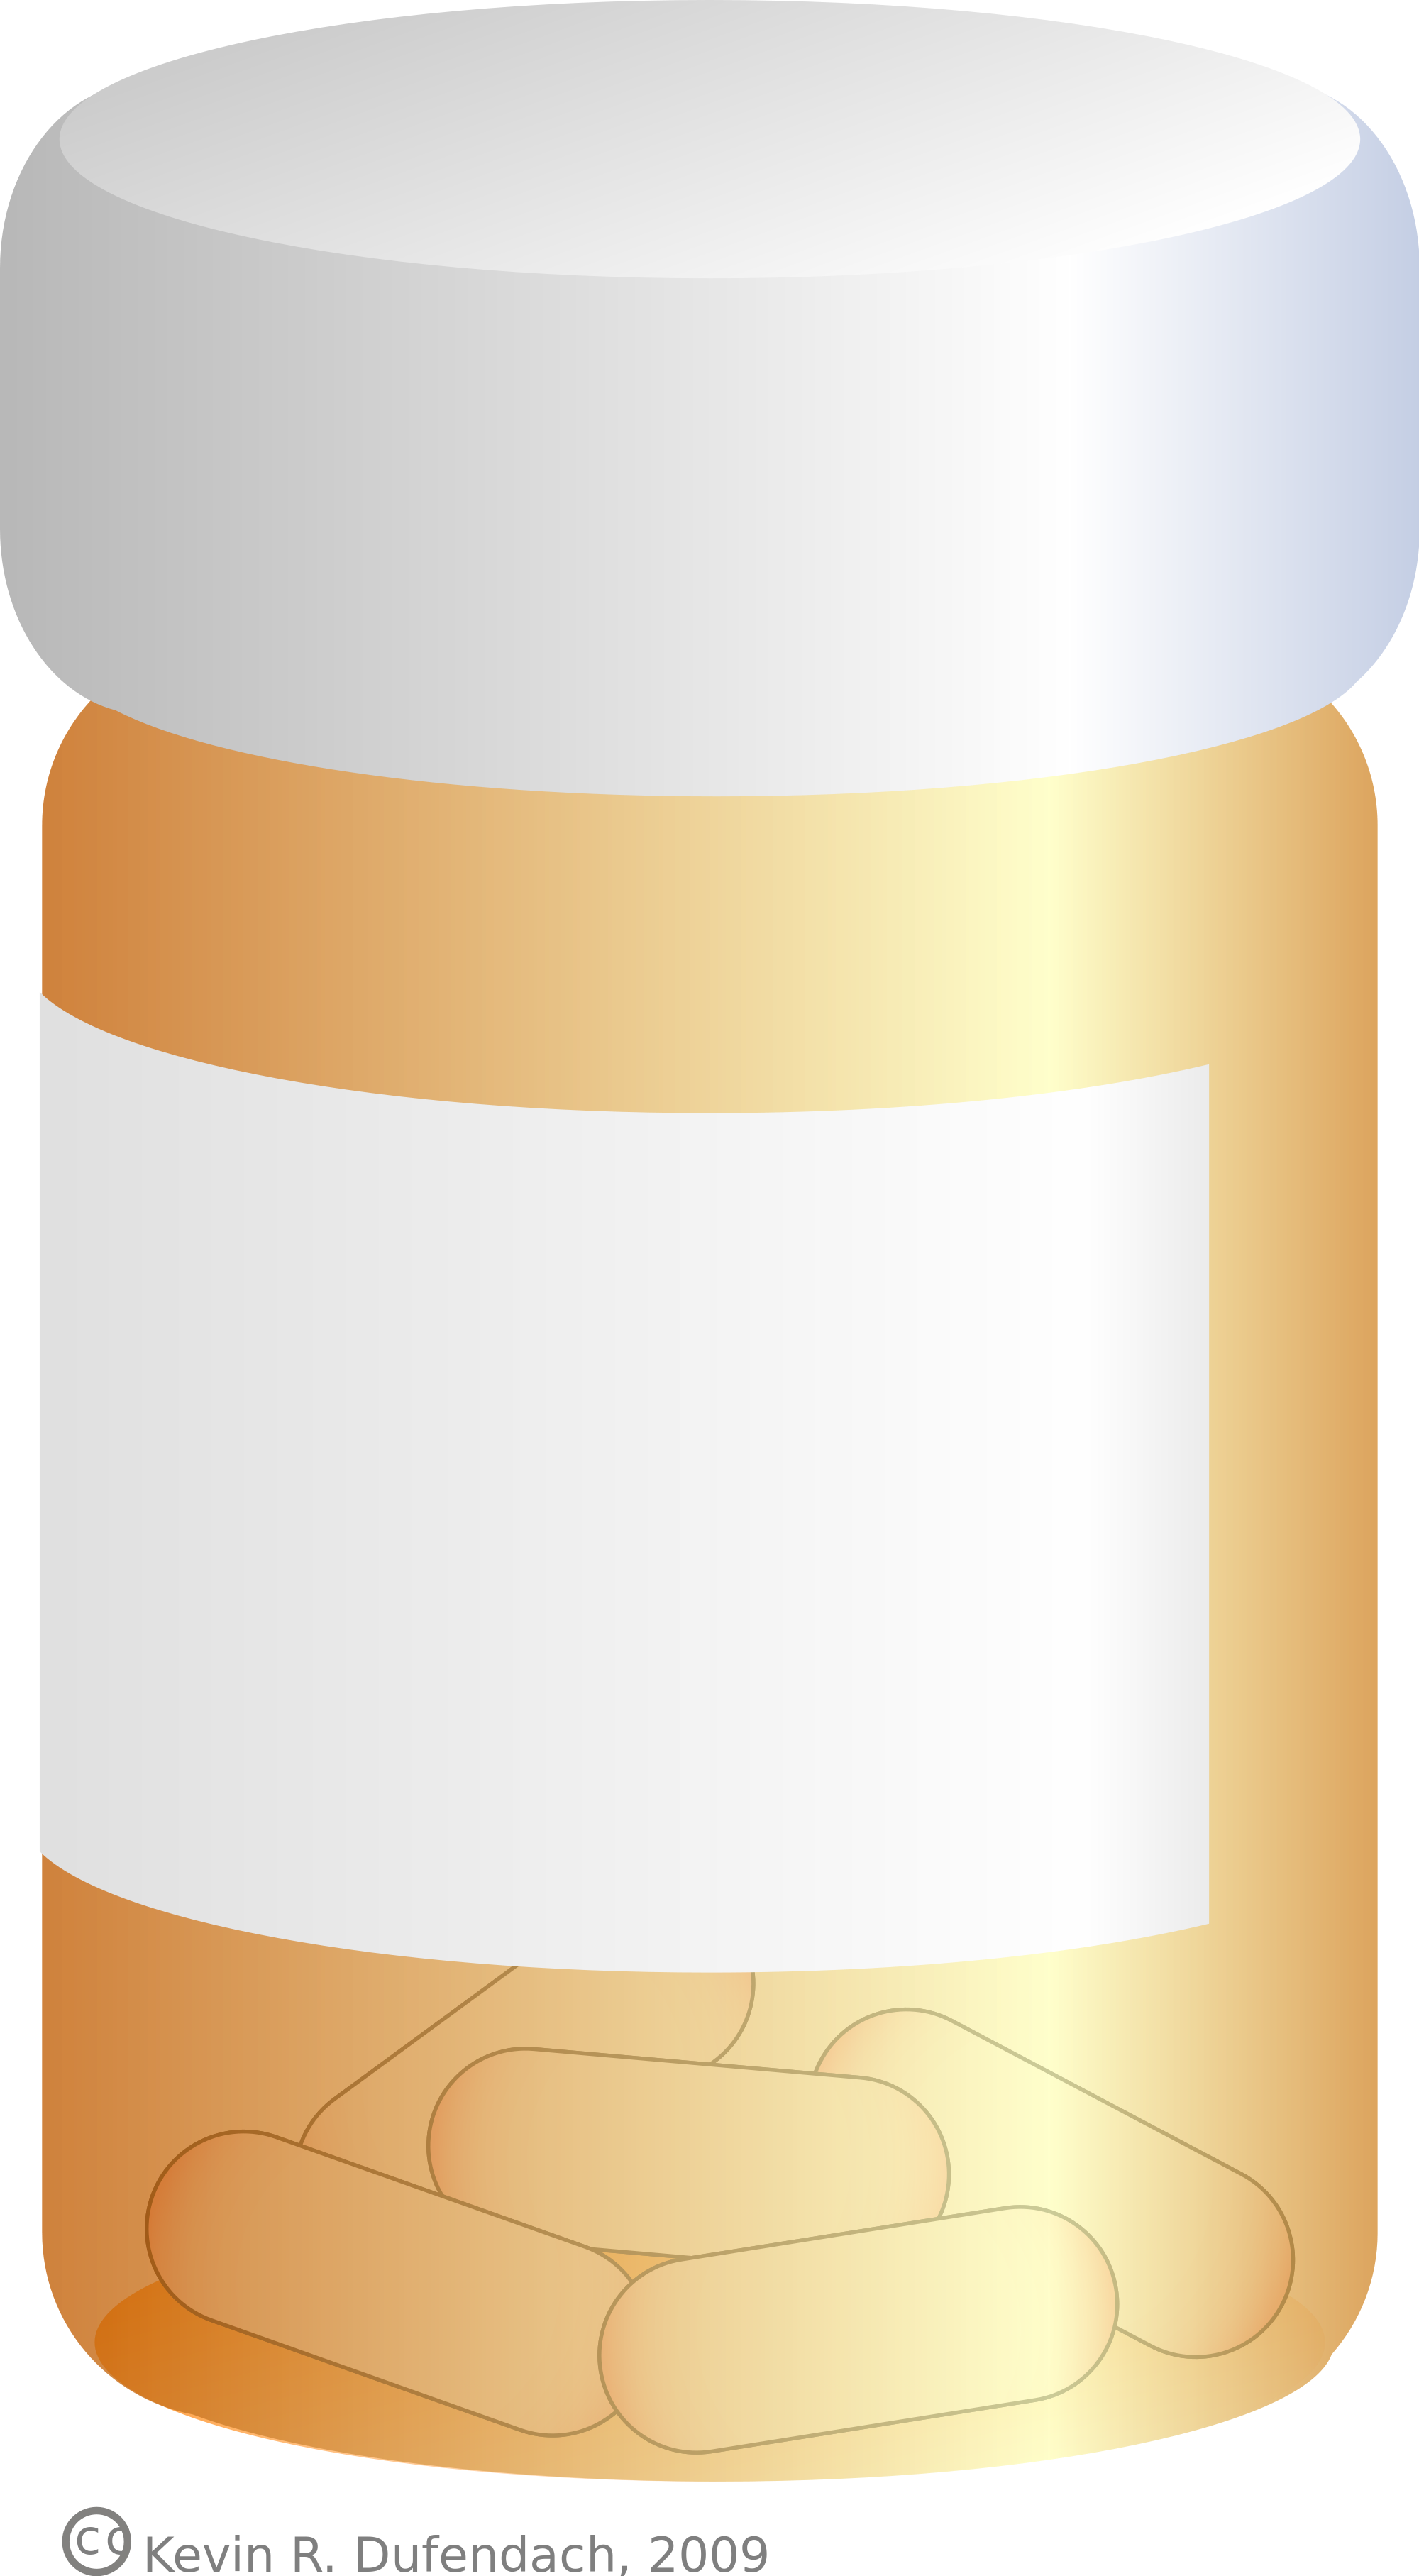 Bottle Medicine - Medicine bo